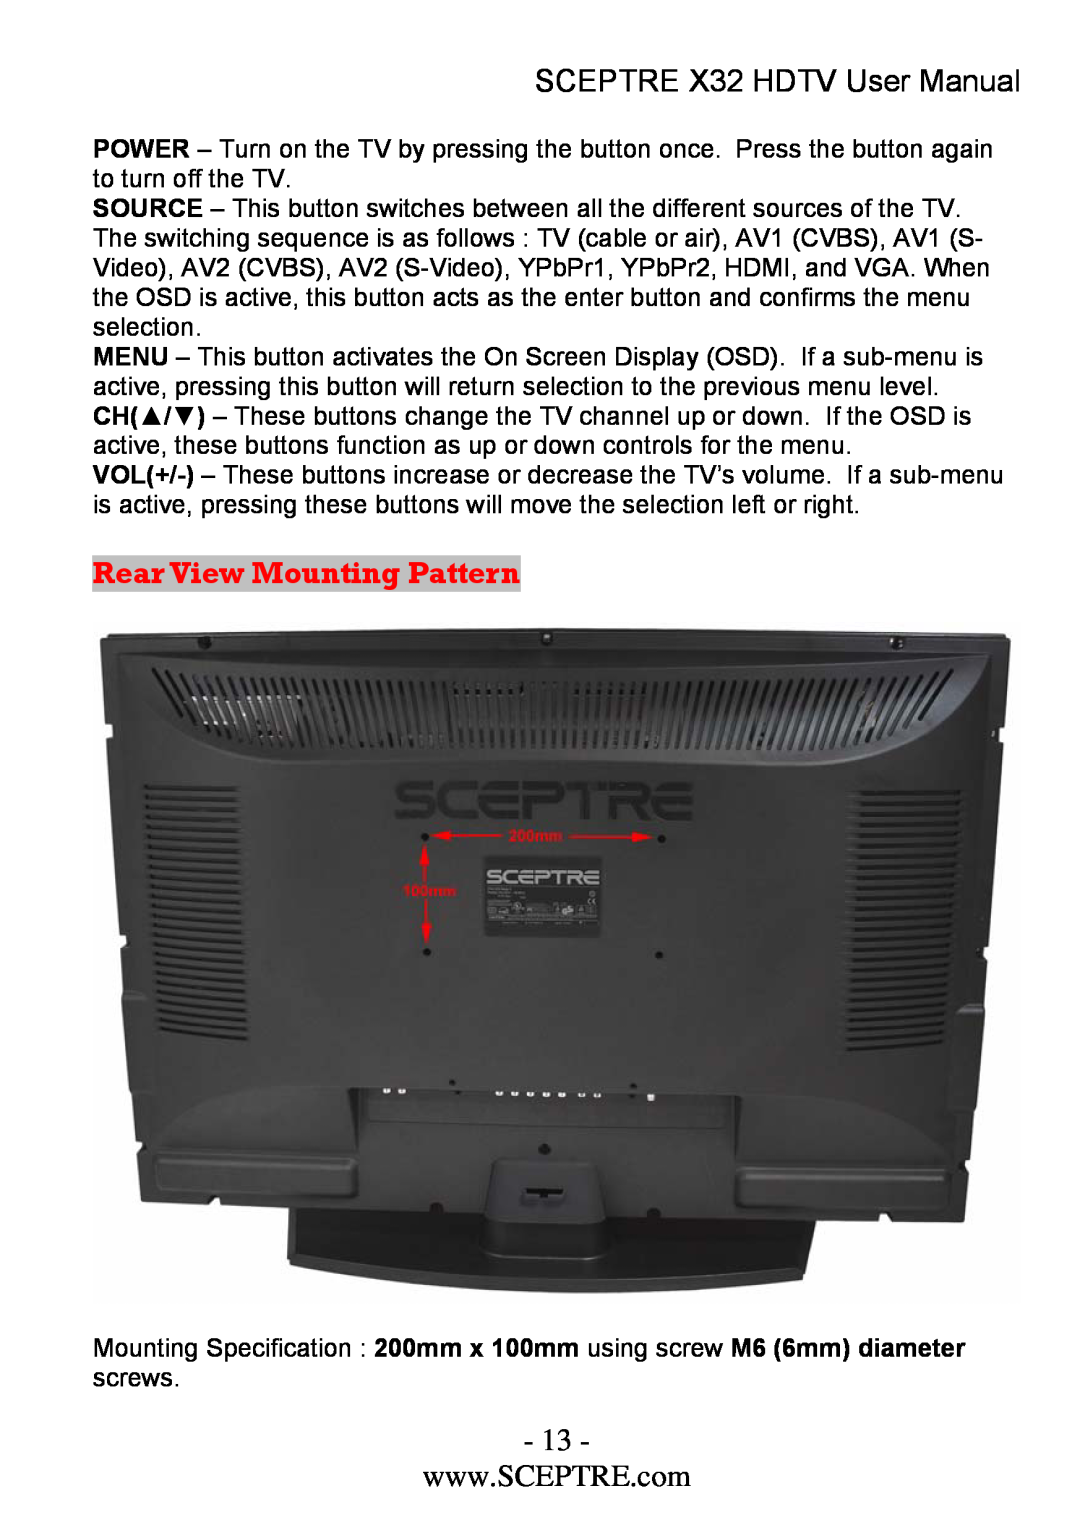 Sceptre Technologies x32 user manual Rear View Mounting Pattern, SCEPTRE X32 HDTV User Manual 